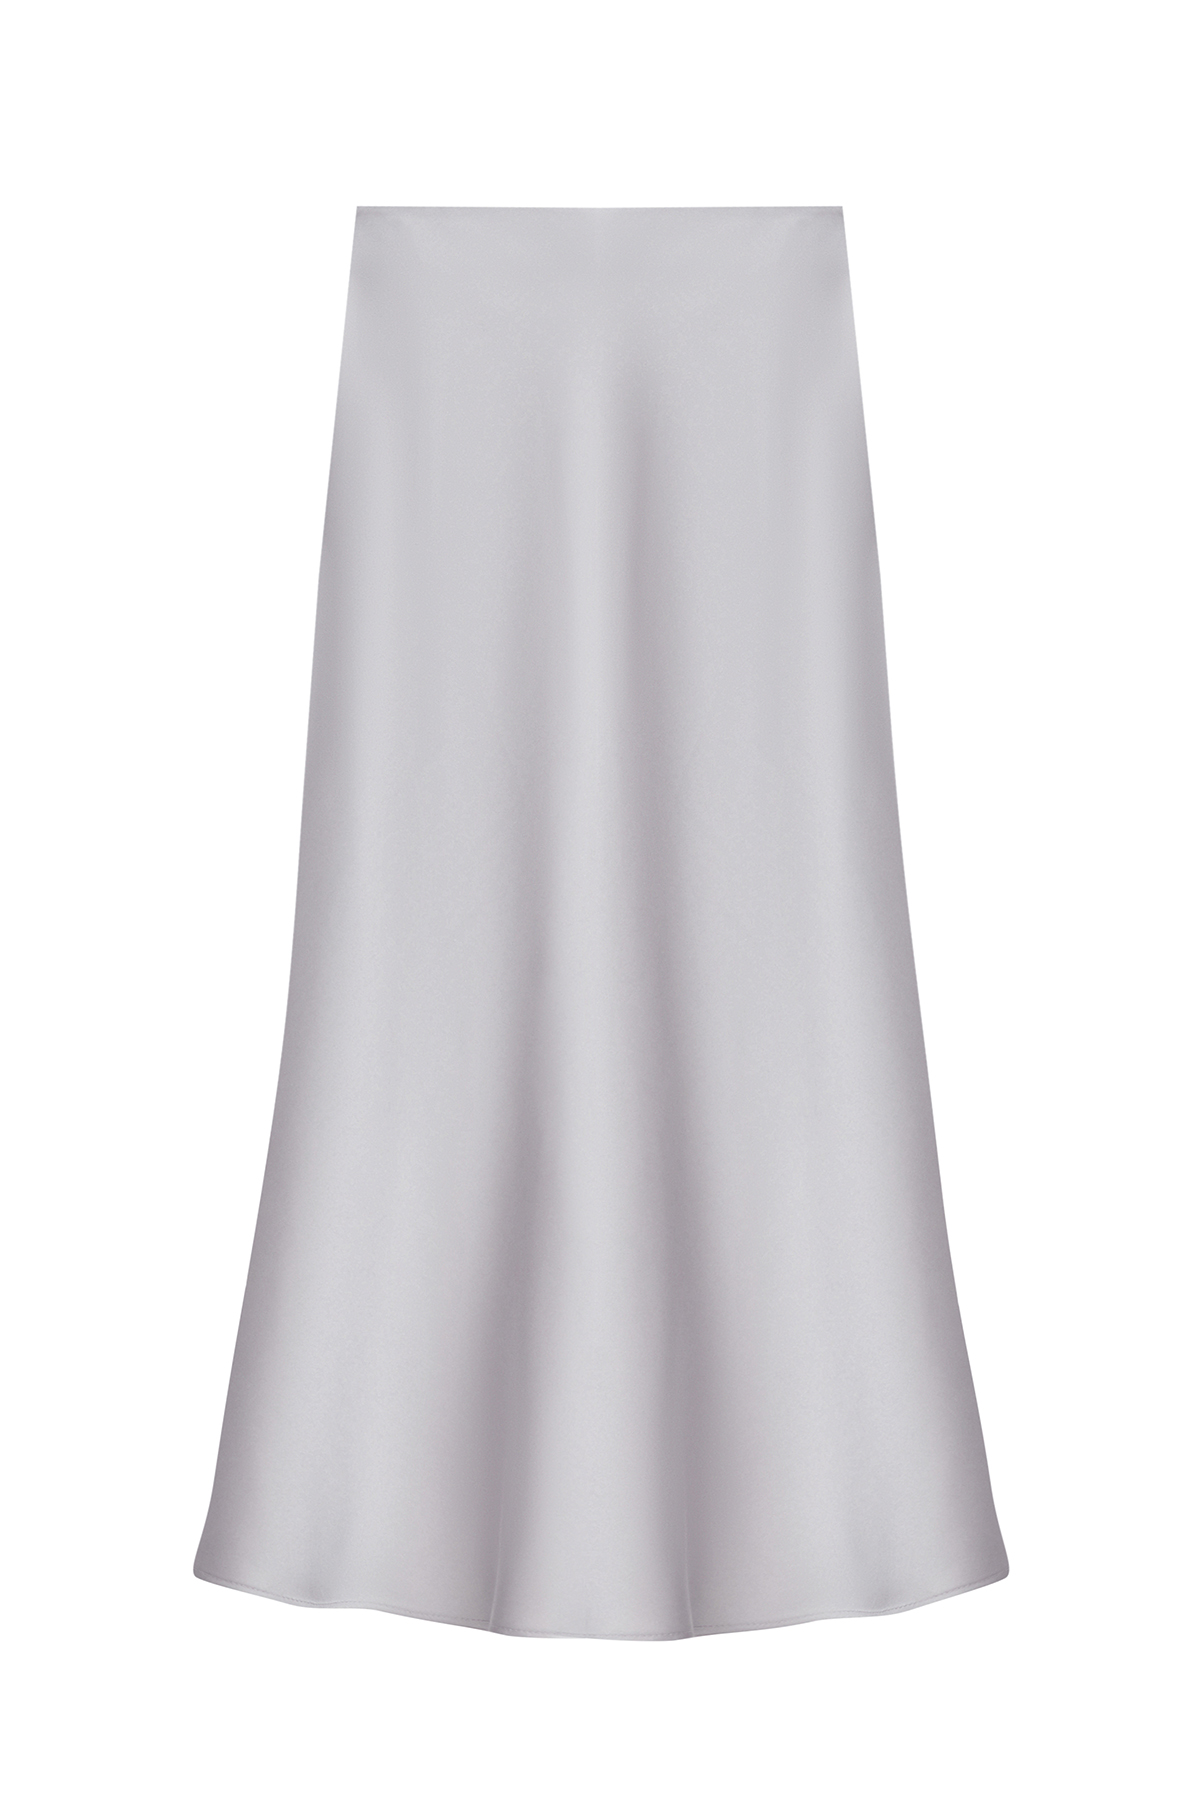 Silver chrome satin elongated midi skirt, photo 5